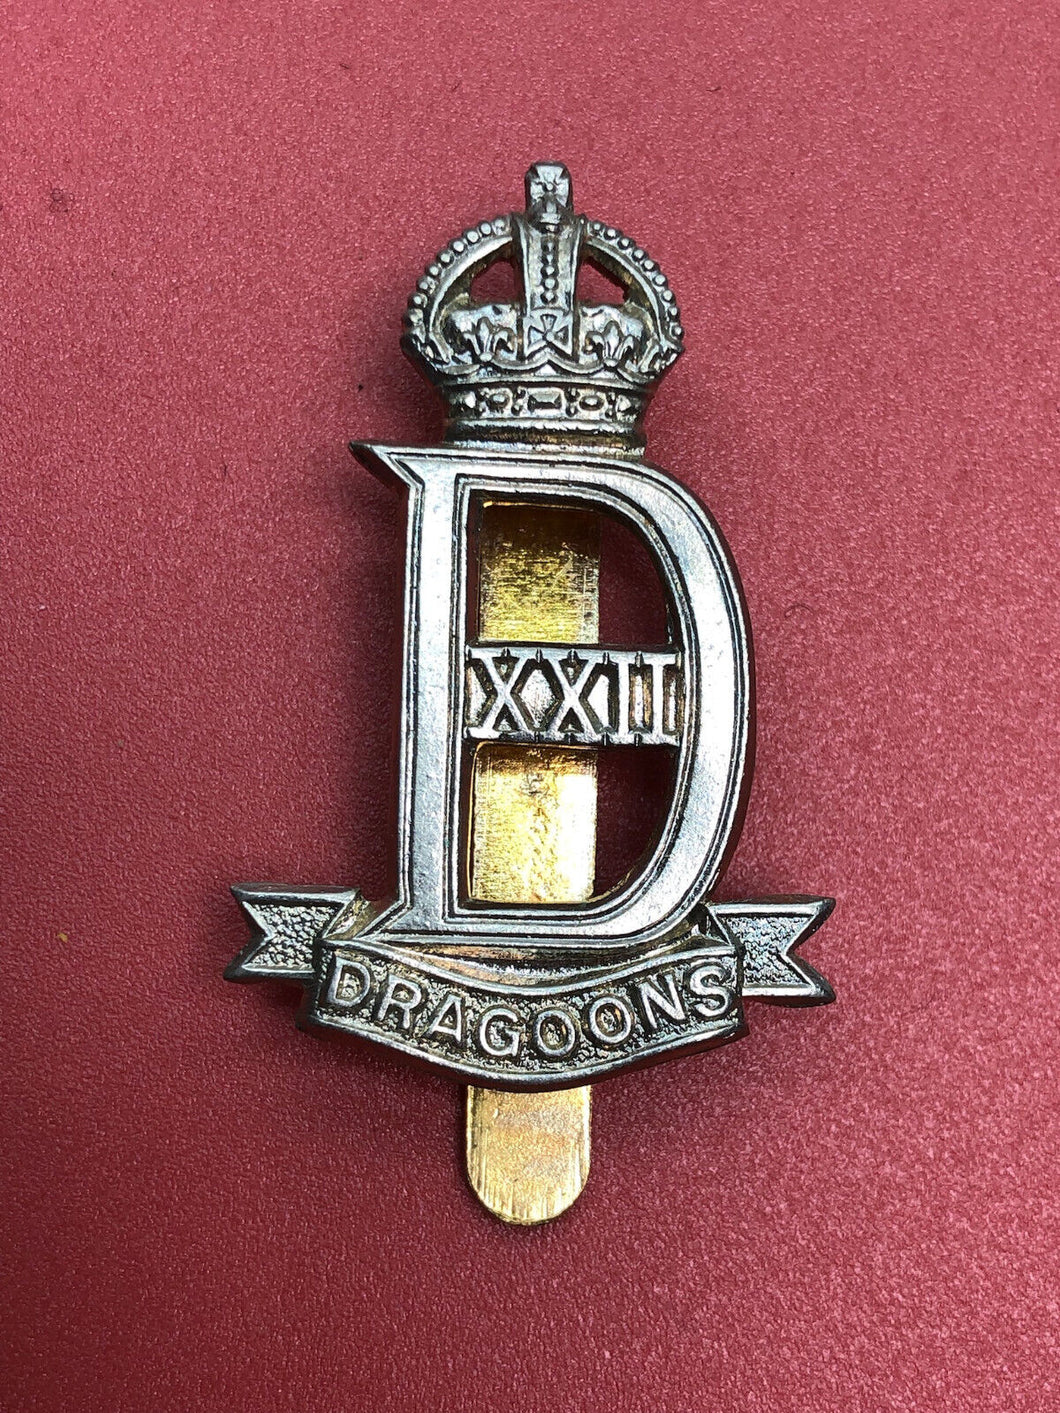 Original WW2 British Army Cap Badge - 22nd Dragoons